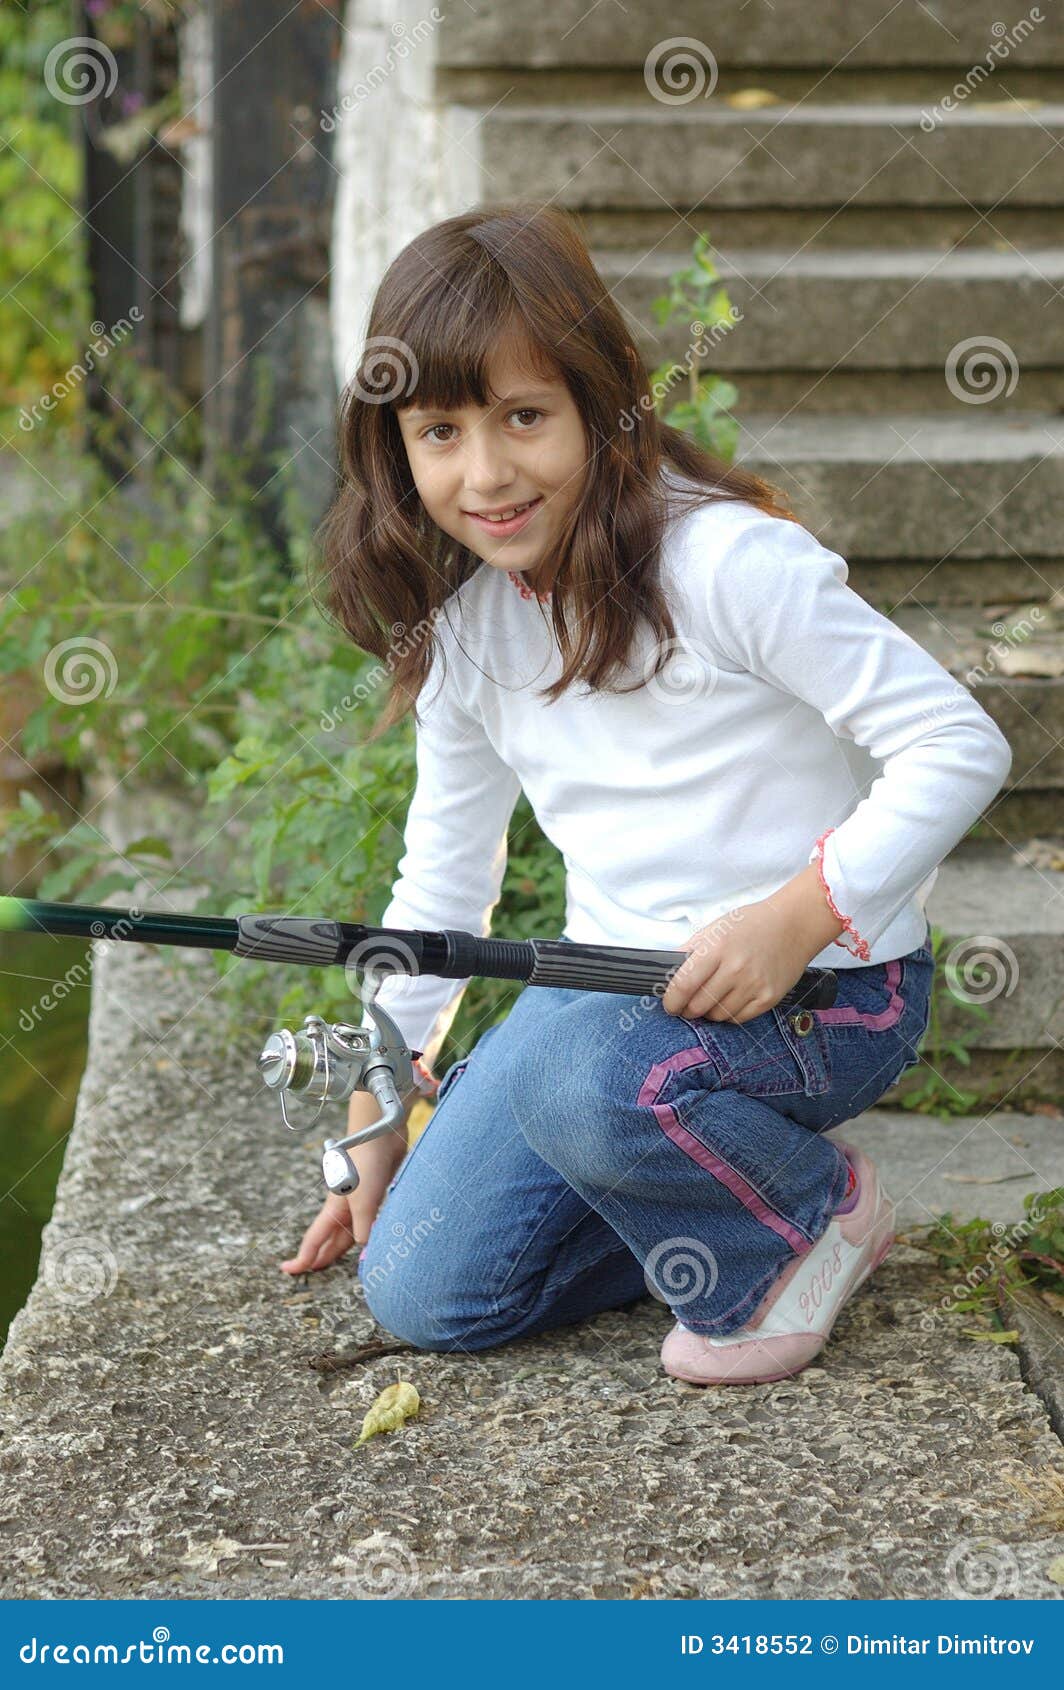 https://thumbs.dreamstime.com/z/little-girl-fishing-pole-3418552.jpg